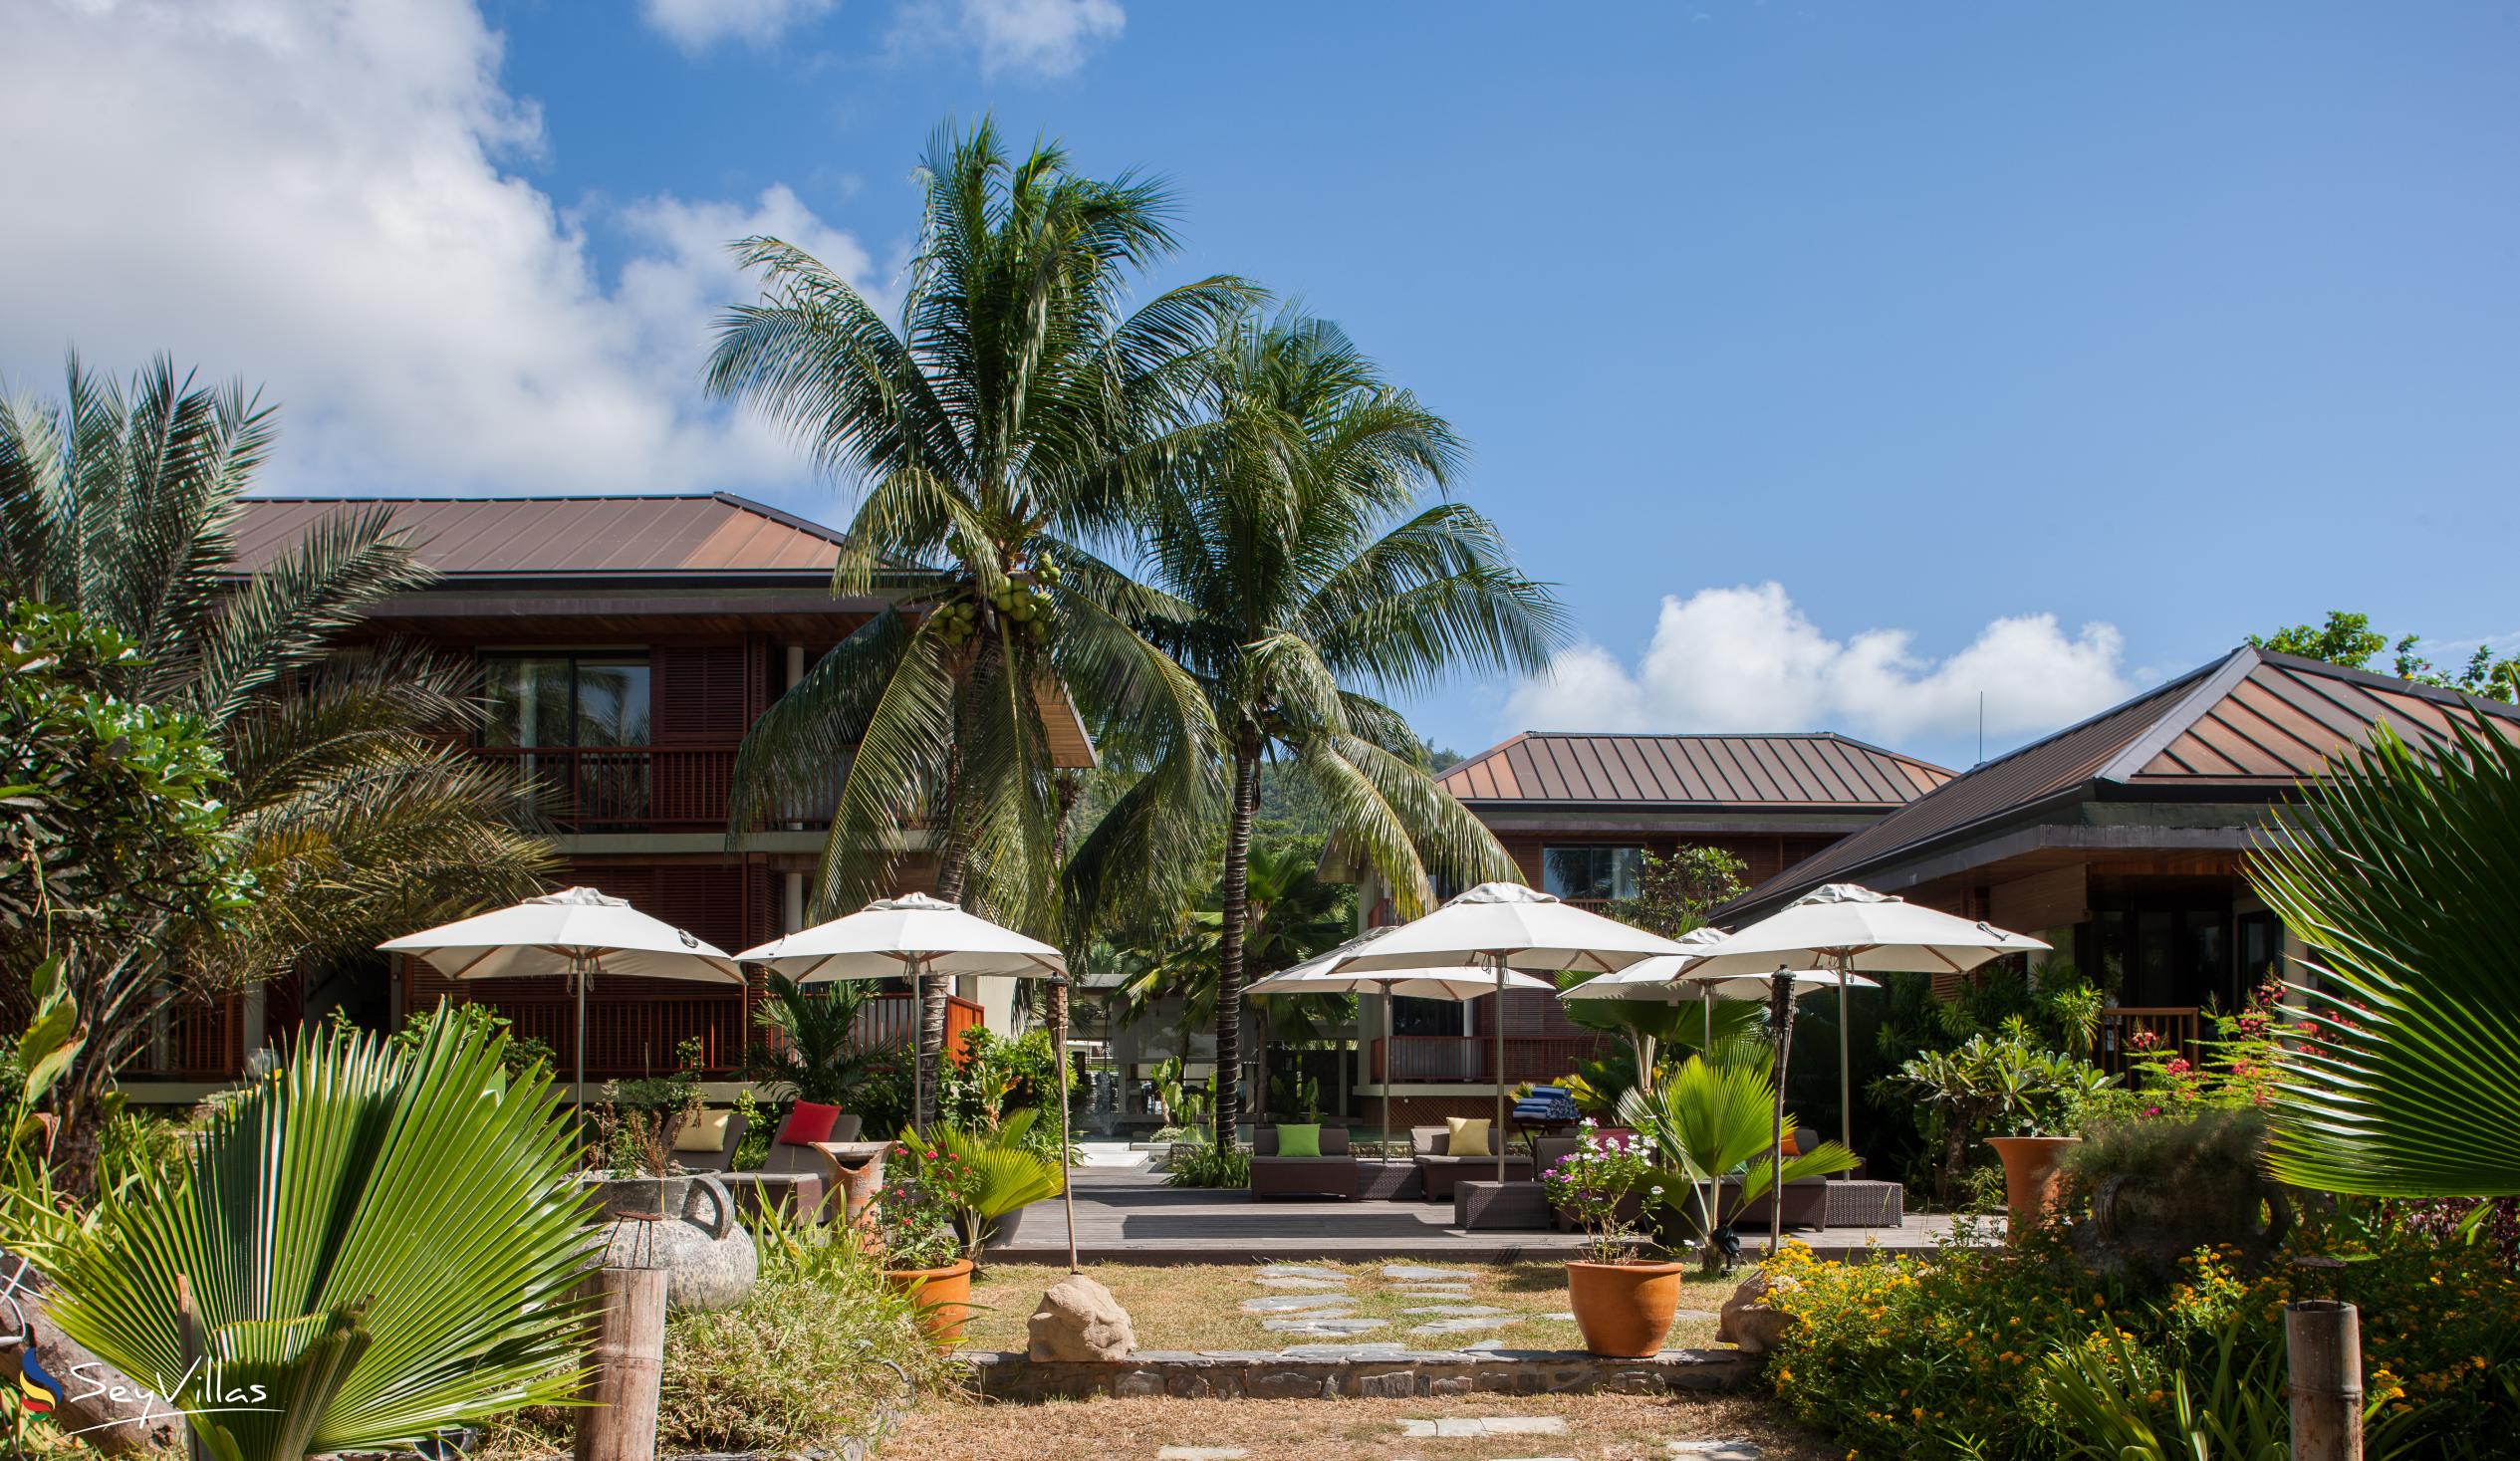 Photo 3: Dhevatara Beach Hotel - Outdoor area - Praslin (Seychelles)